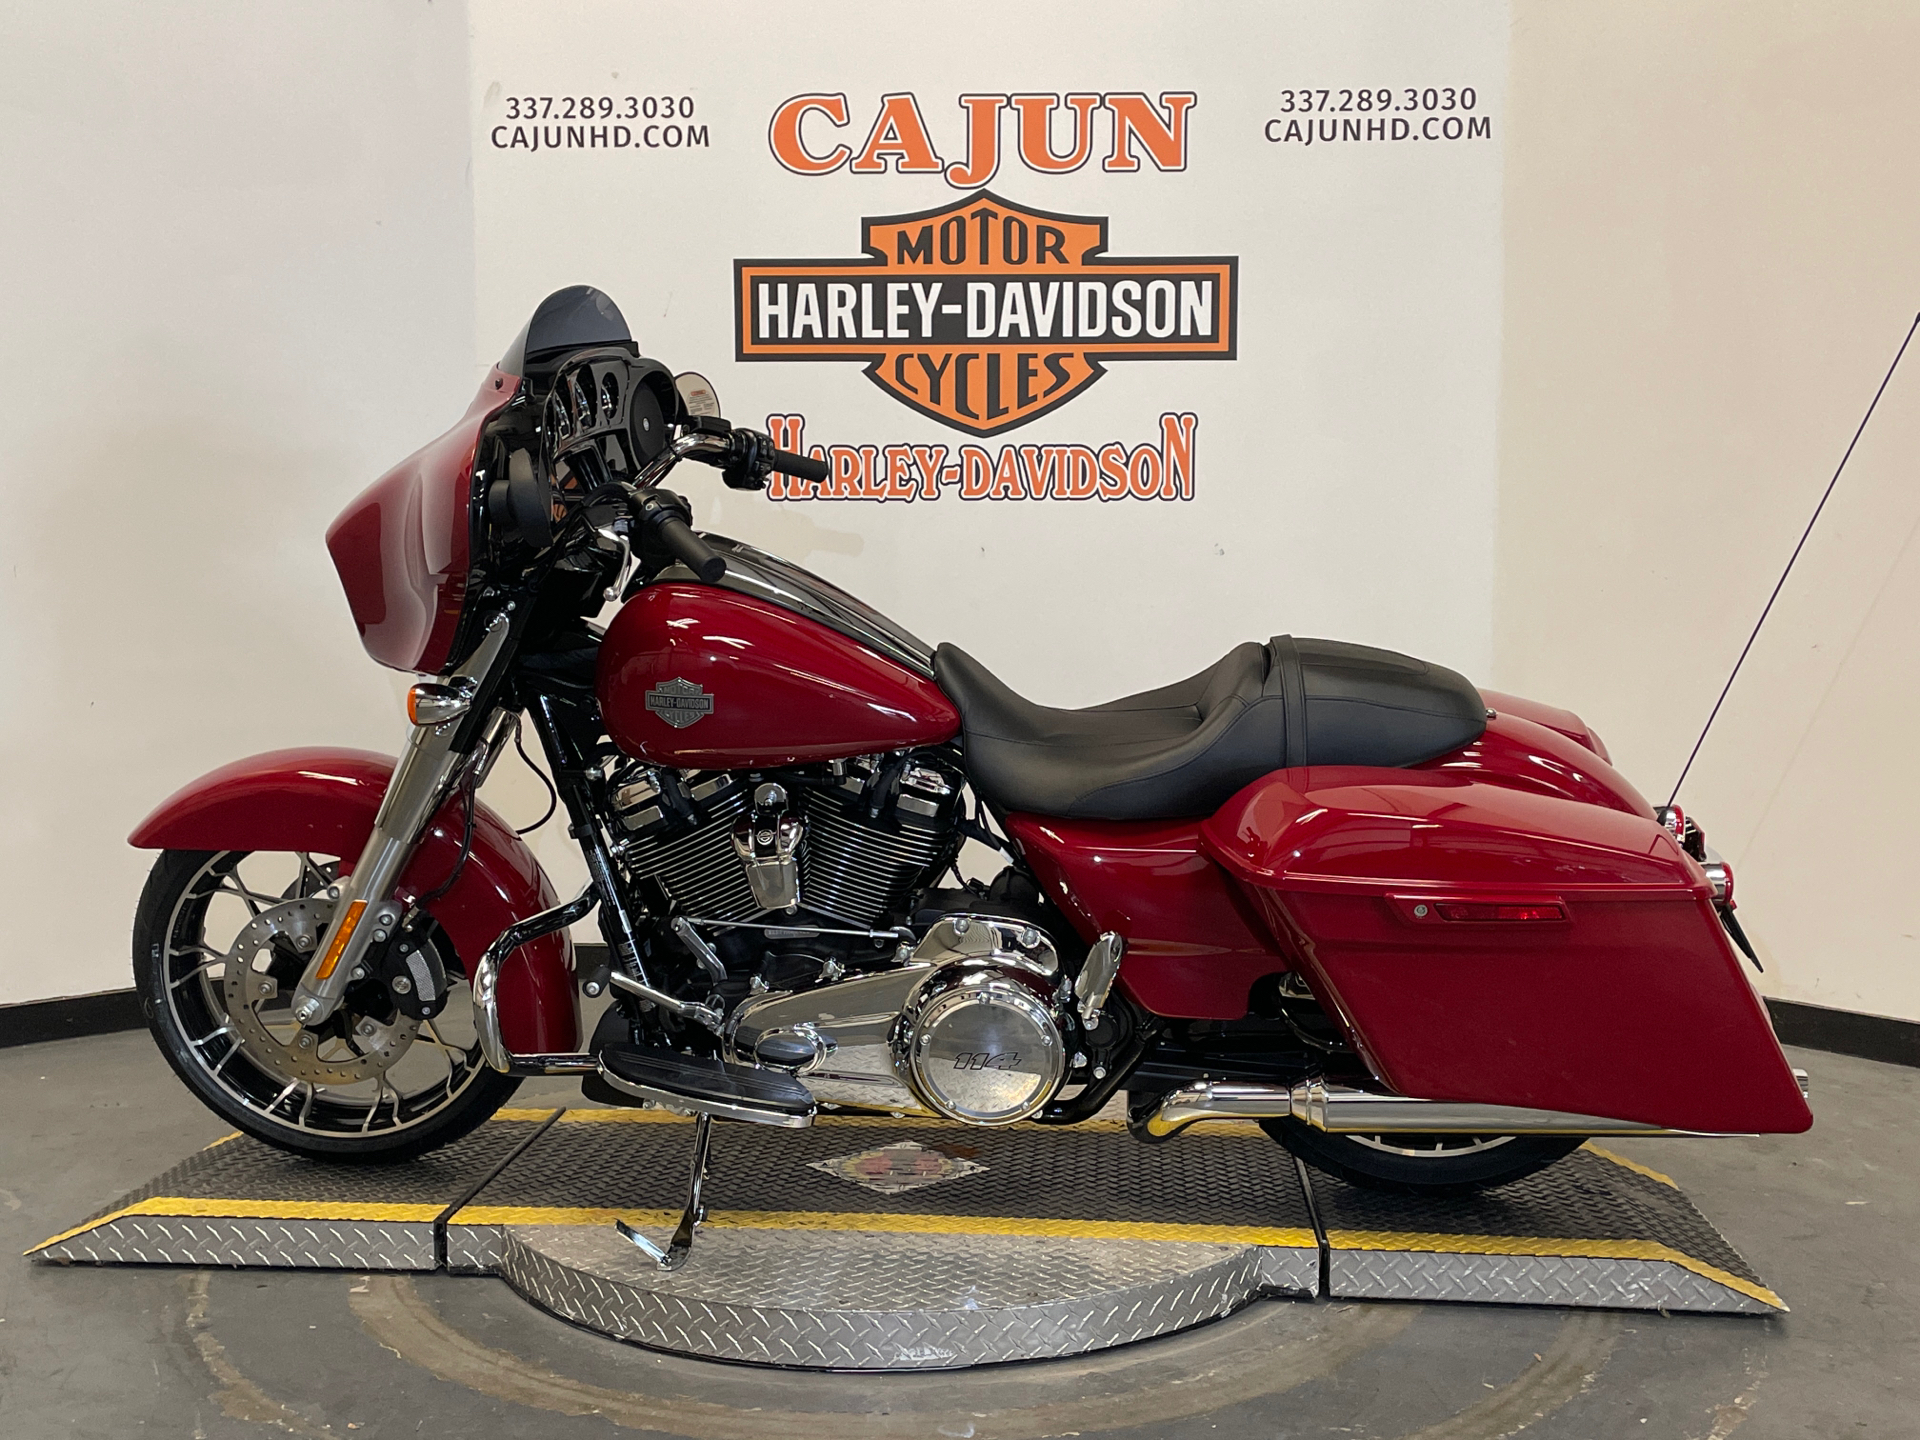 2021 Harley-Davidson Street Glide Special red - Photo 4